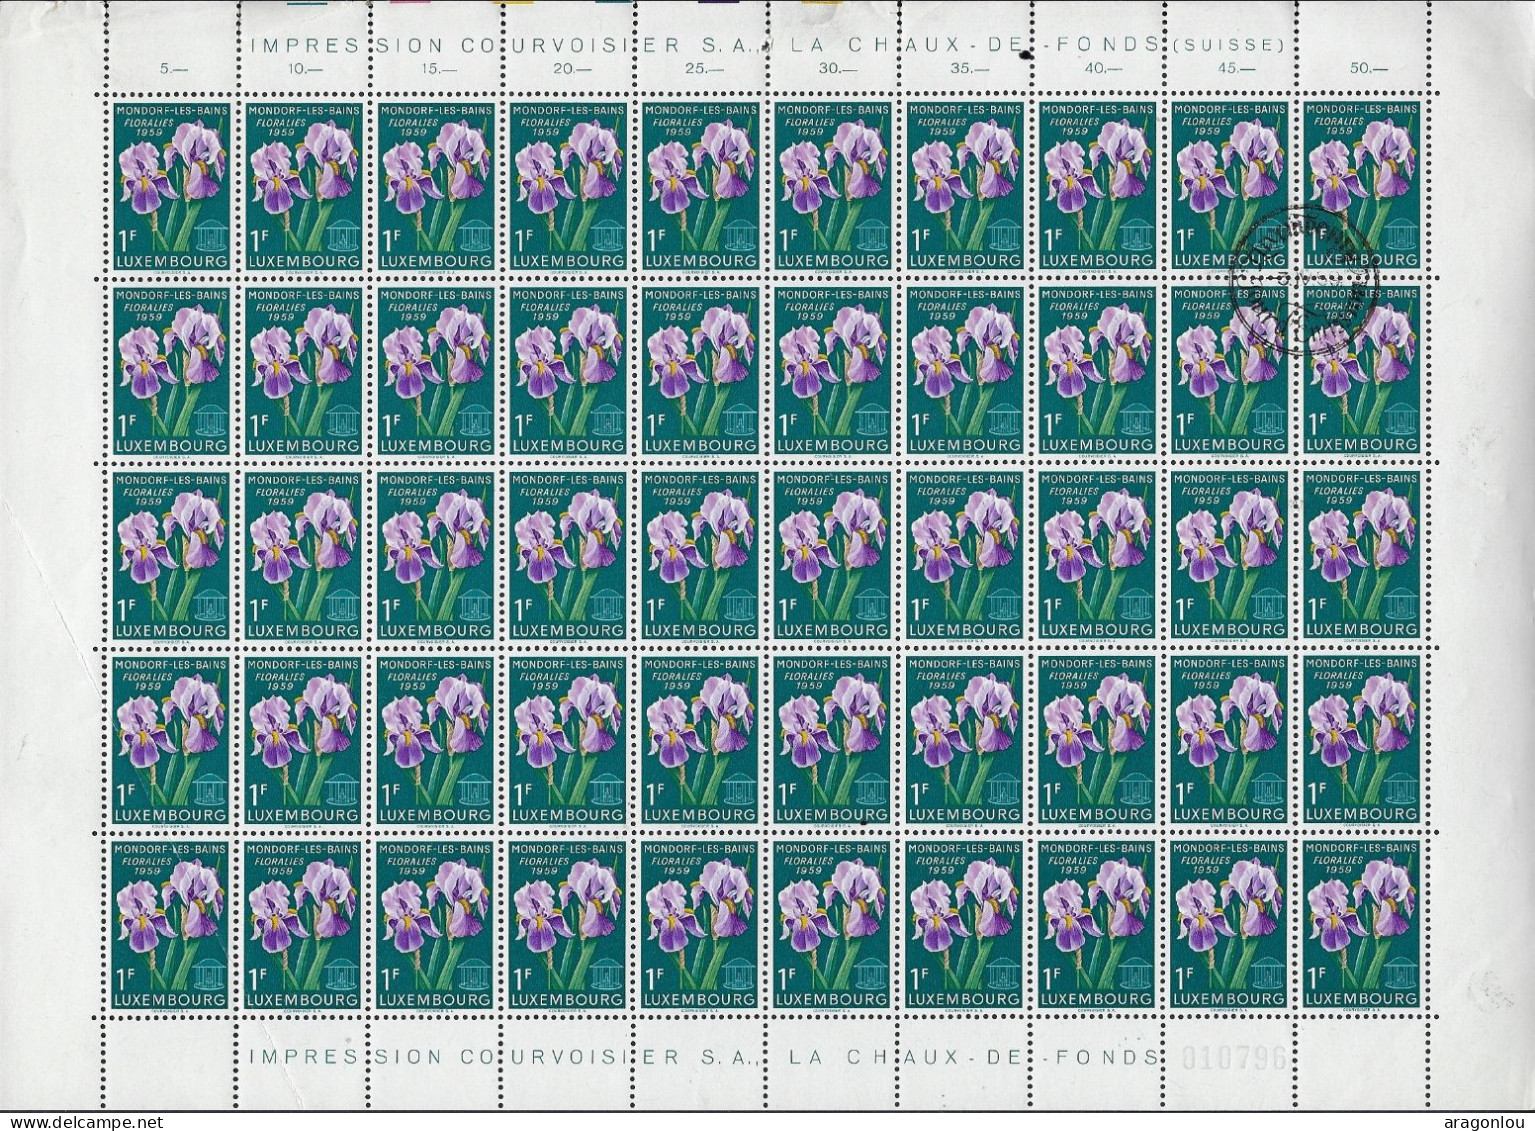 Luxembourg - Luxemburg -  Feuille à 100 Timbres 1Fr   Mondorf-les-Bains  Floralies   1959 - Hojas Completas